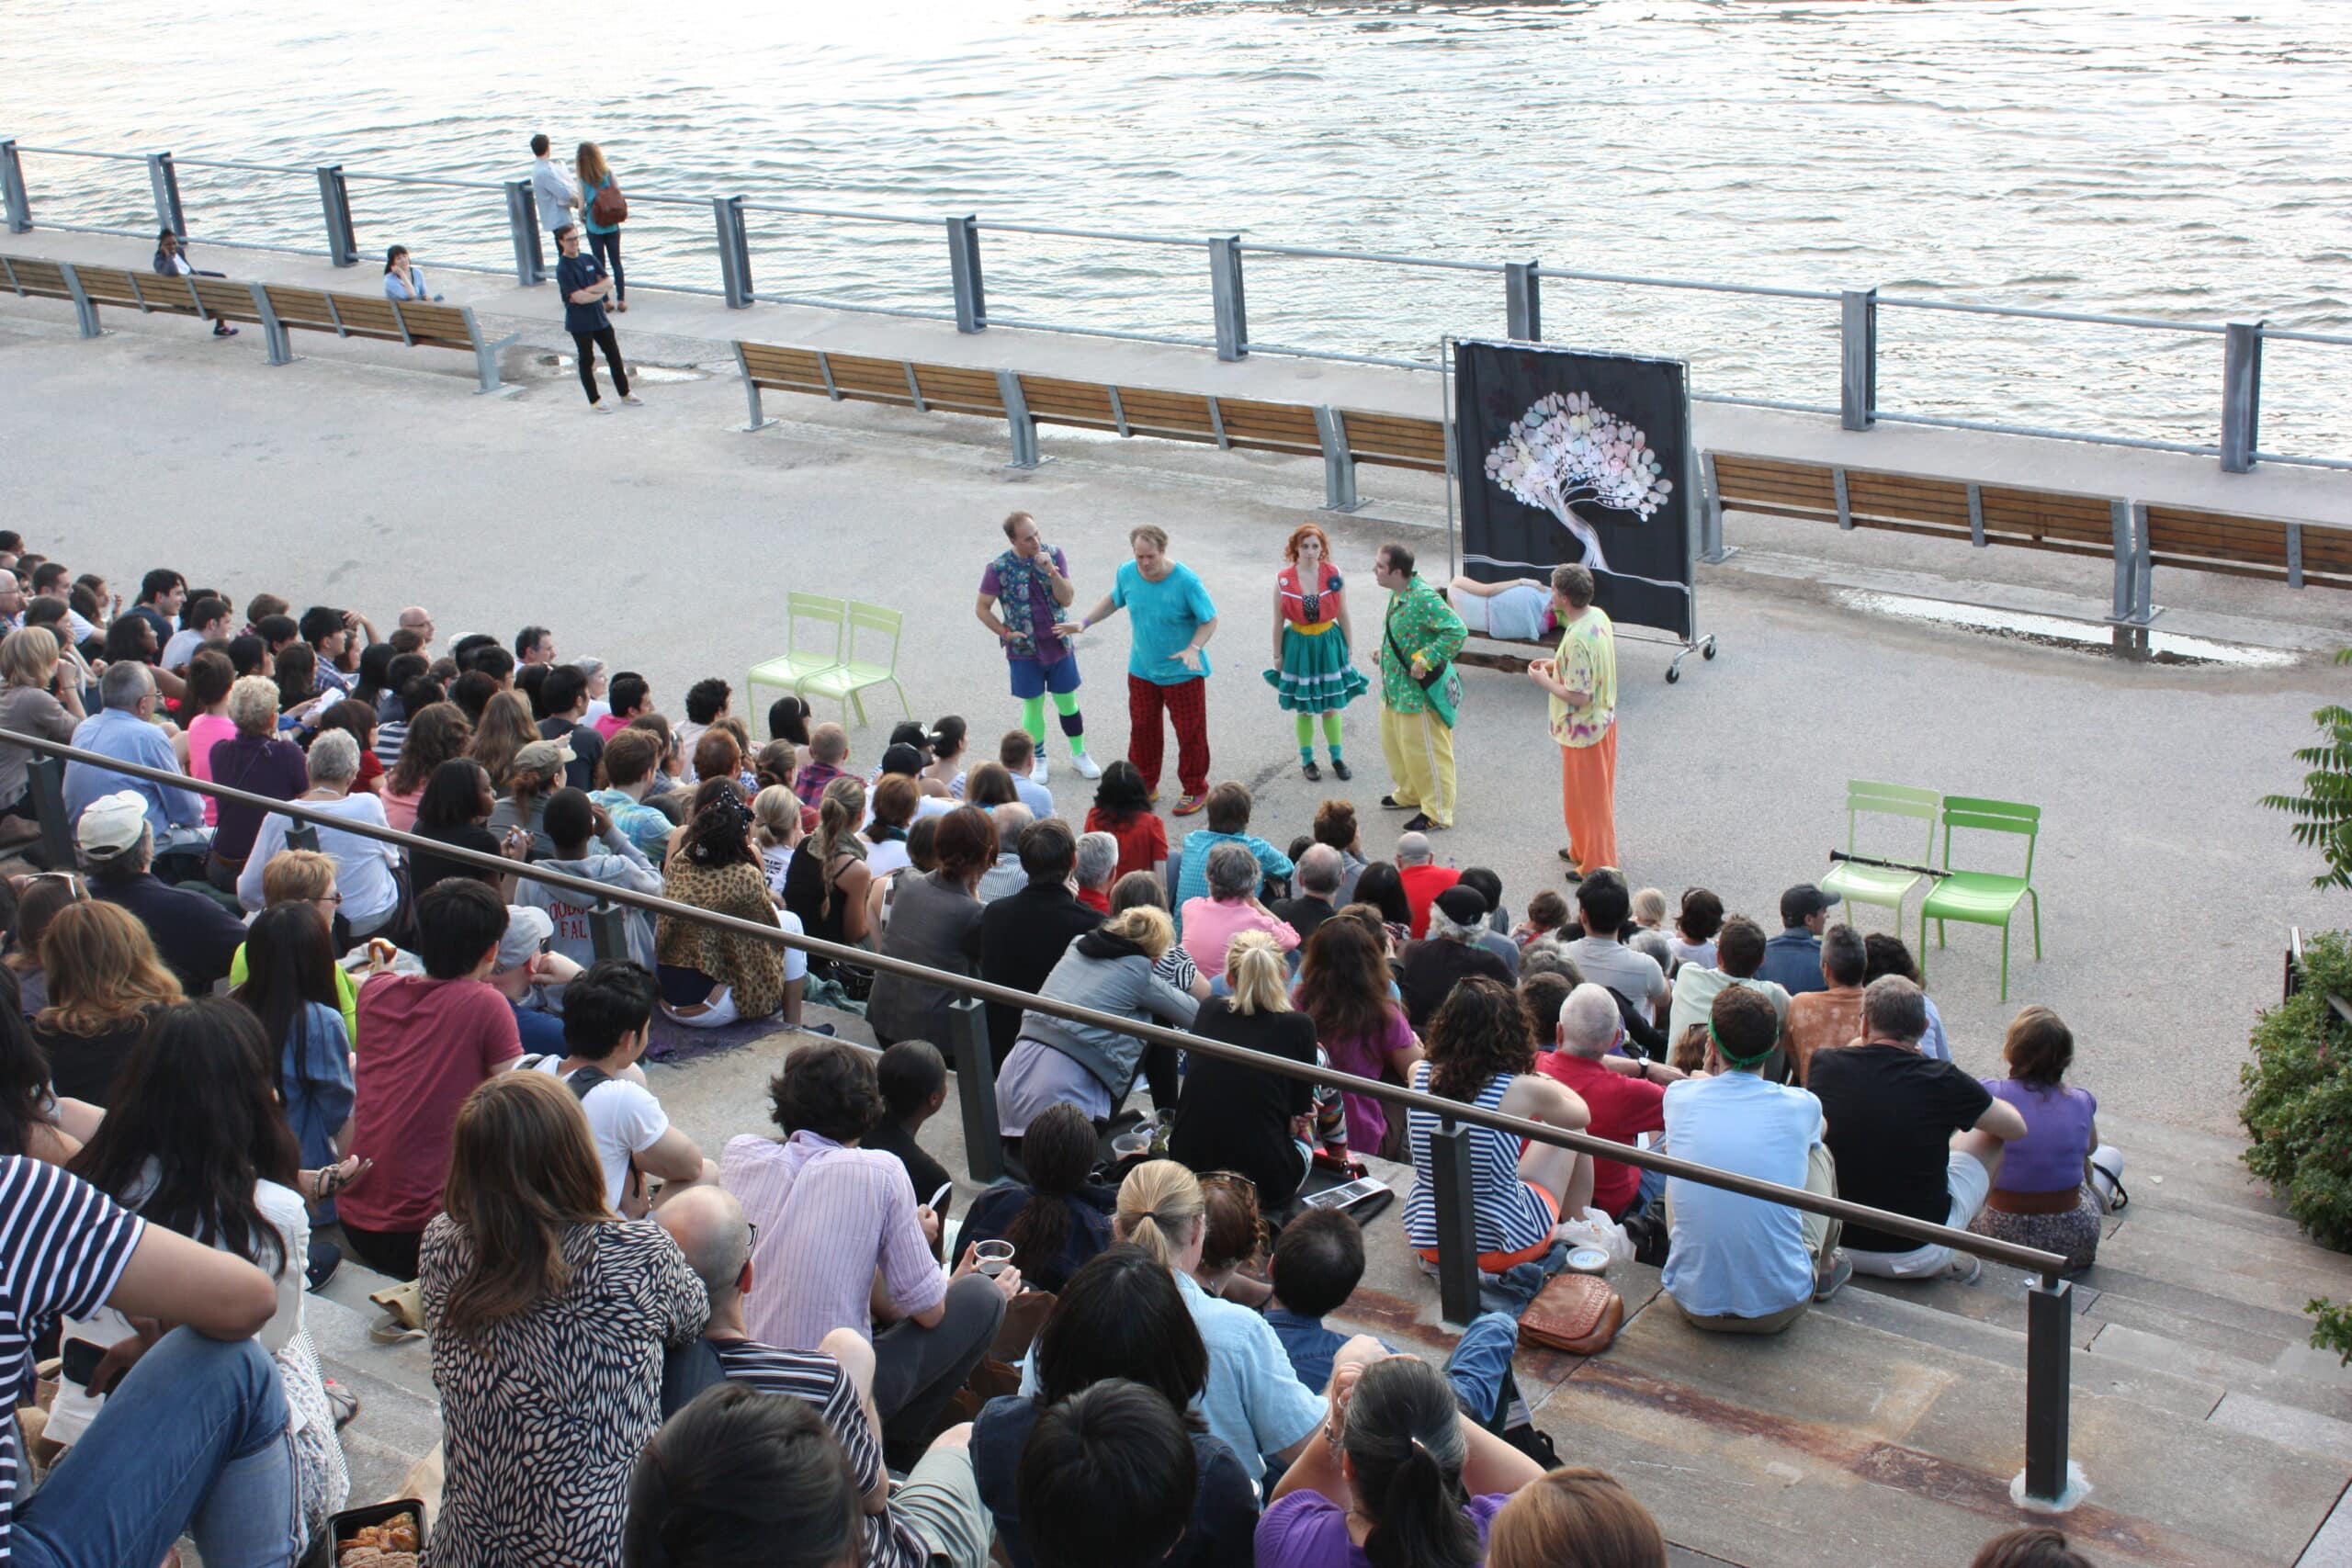 Shakespeare at Sunset performance in Brooklyn Bridge Park